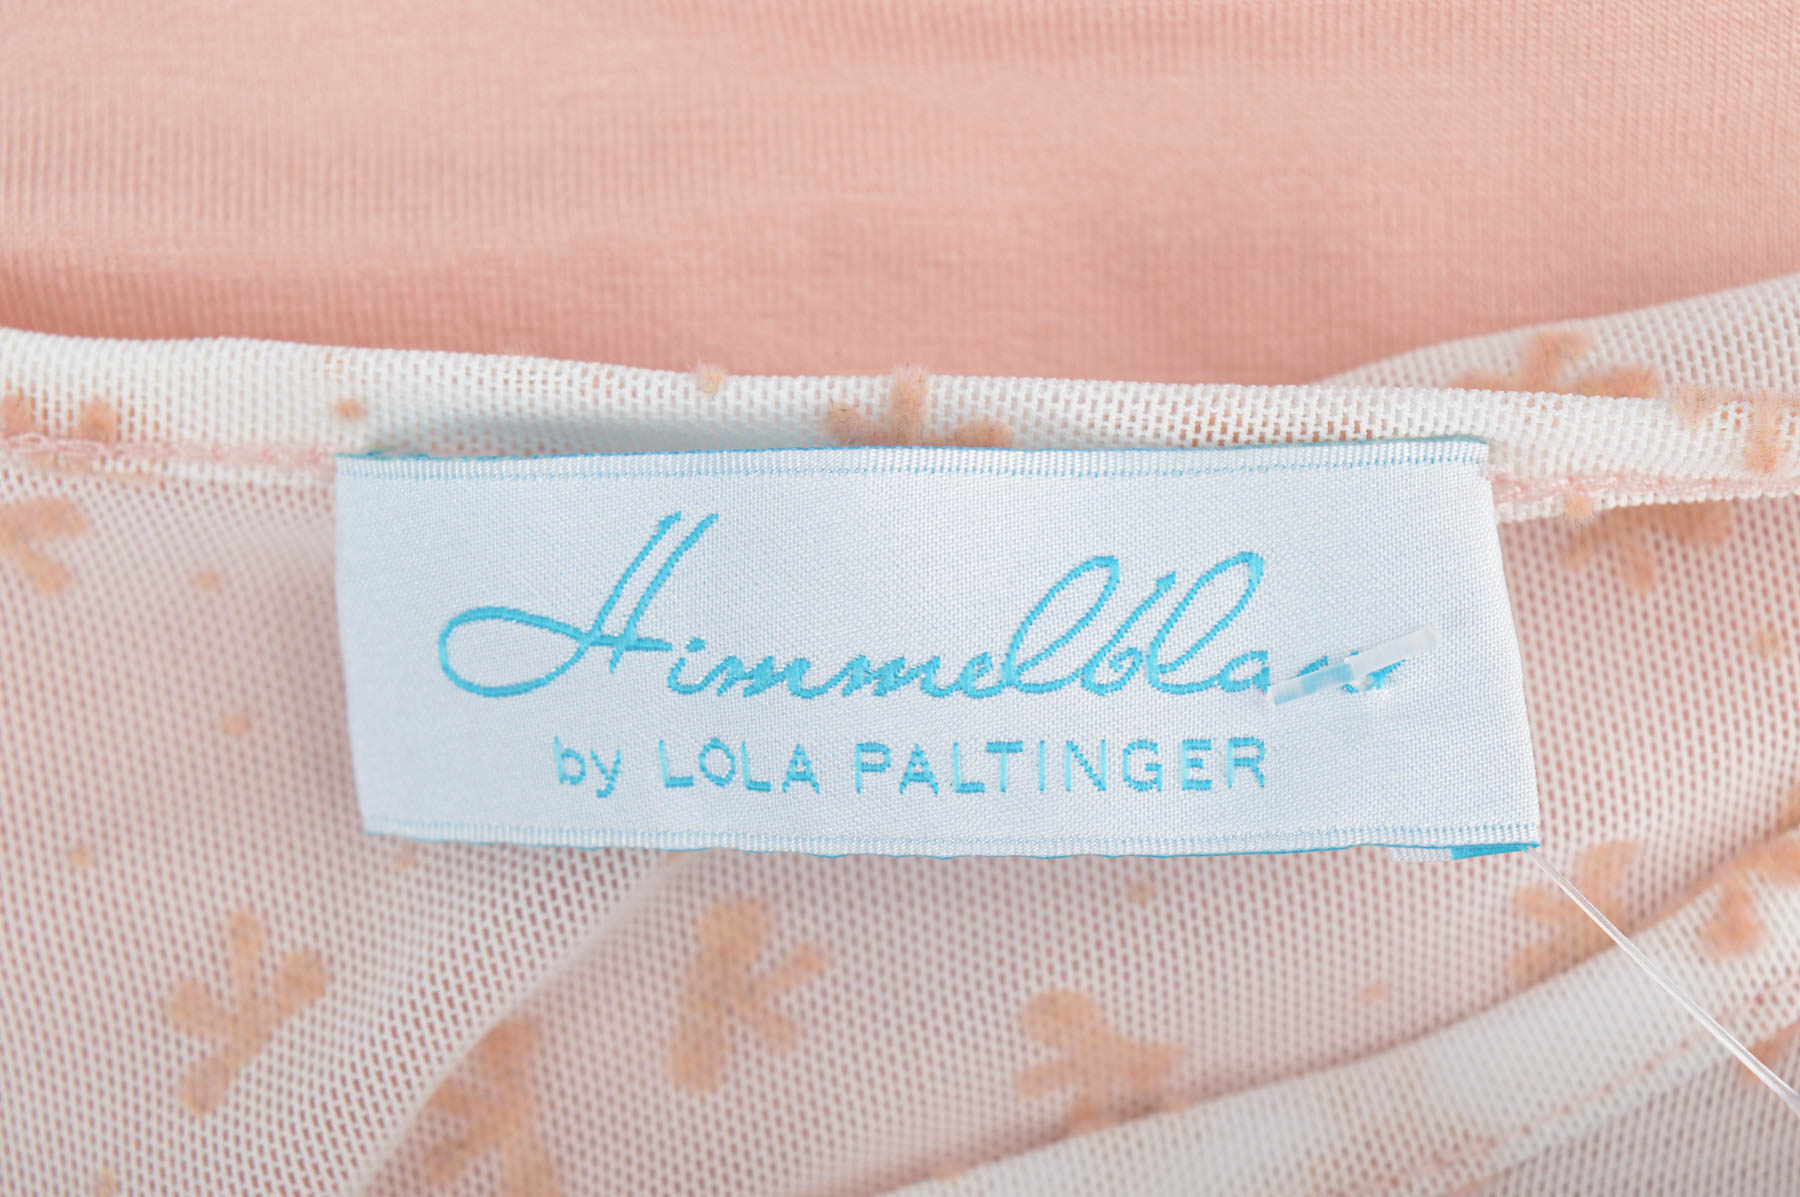 Women's t-shirt - Himmelblau by Lola Paltinger - 2